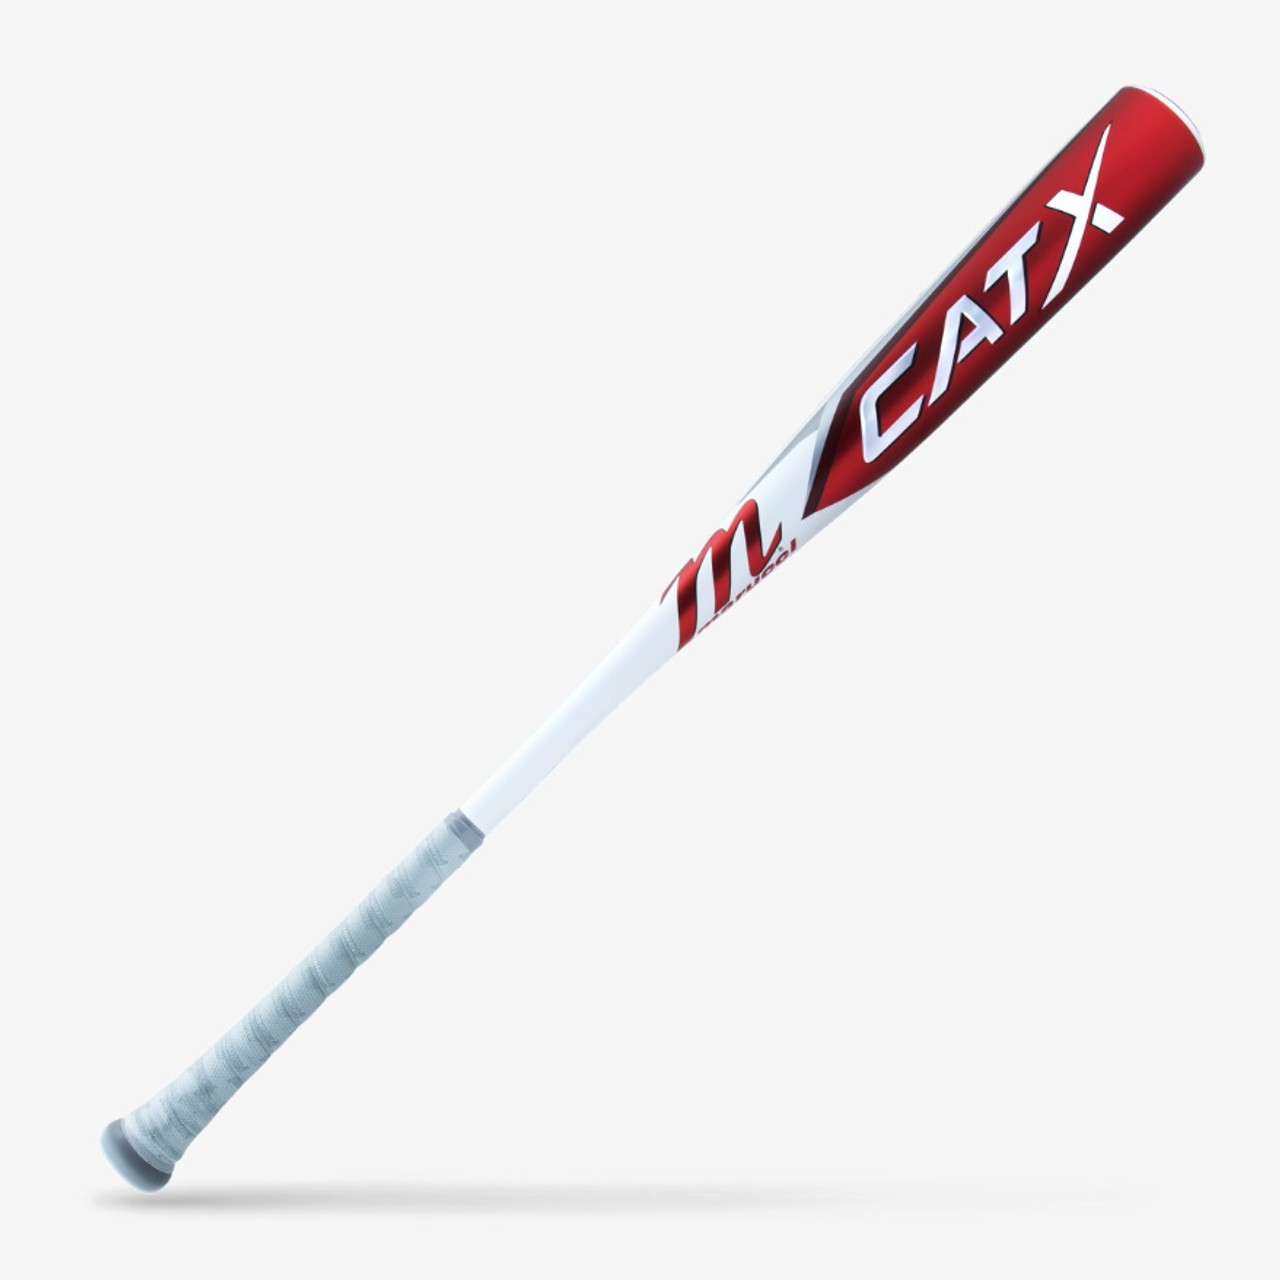 marucci-cat-x-bbcor-3-baseball-bat-30-inch-27-oz MCBCX-3027   THE CATX BBCOR The CATX baseball bat is a top-of-the-line option